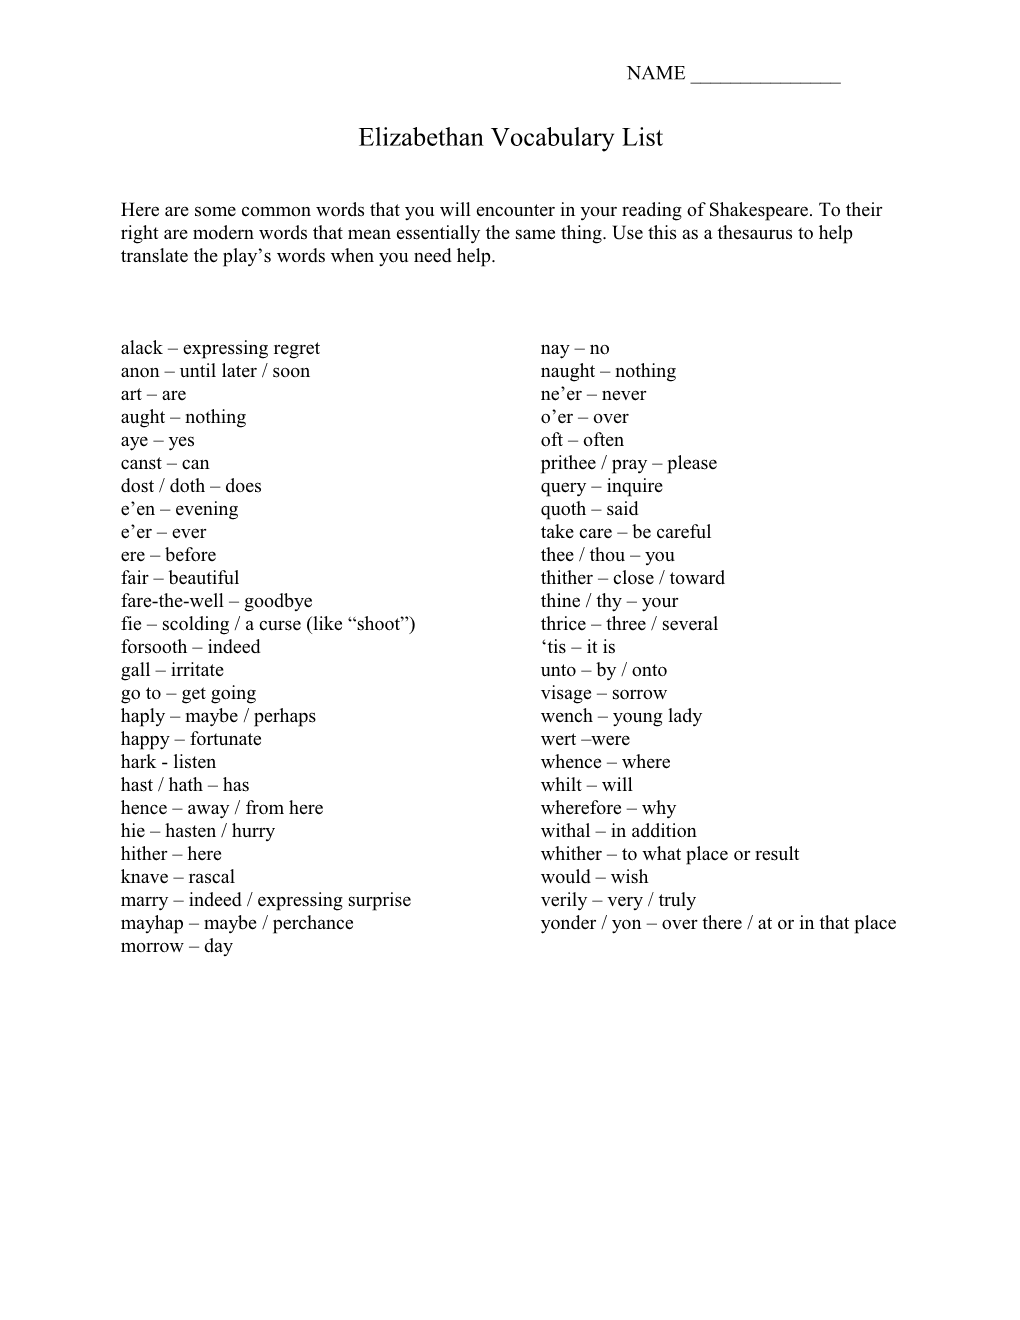 Elizabethan Vocabulary List